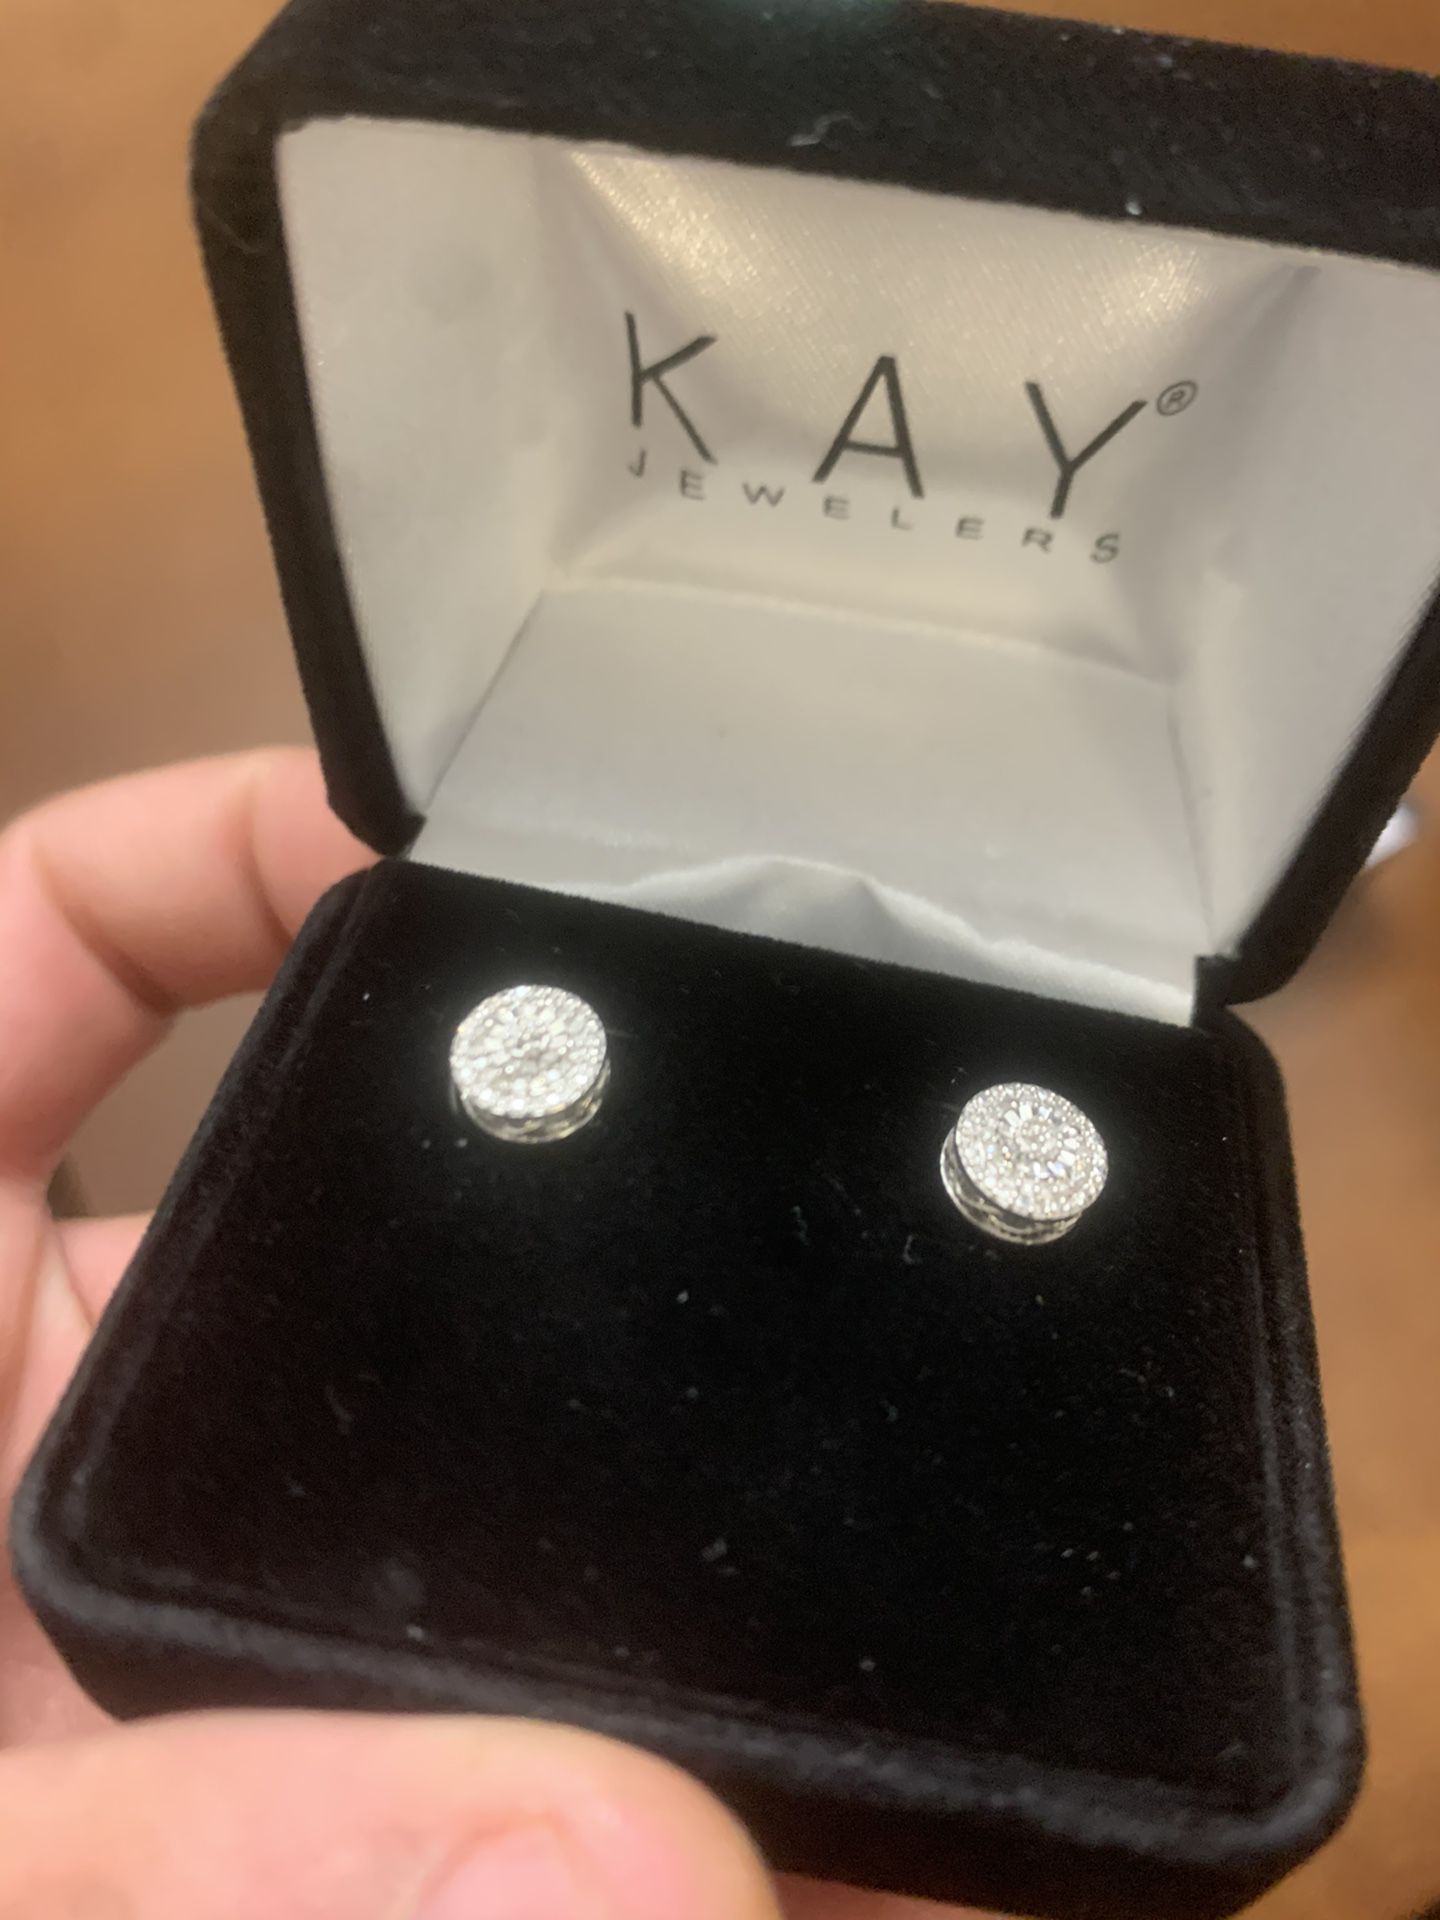 Kay jewelers 100% silver diamond earrings never worn